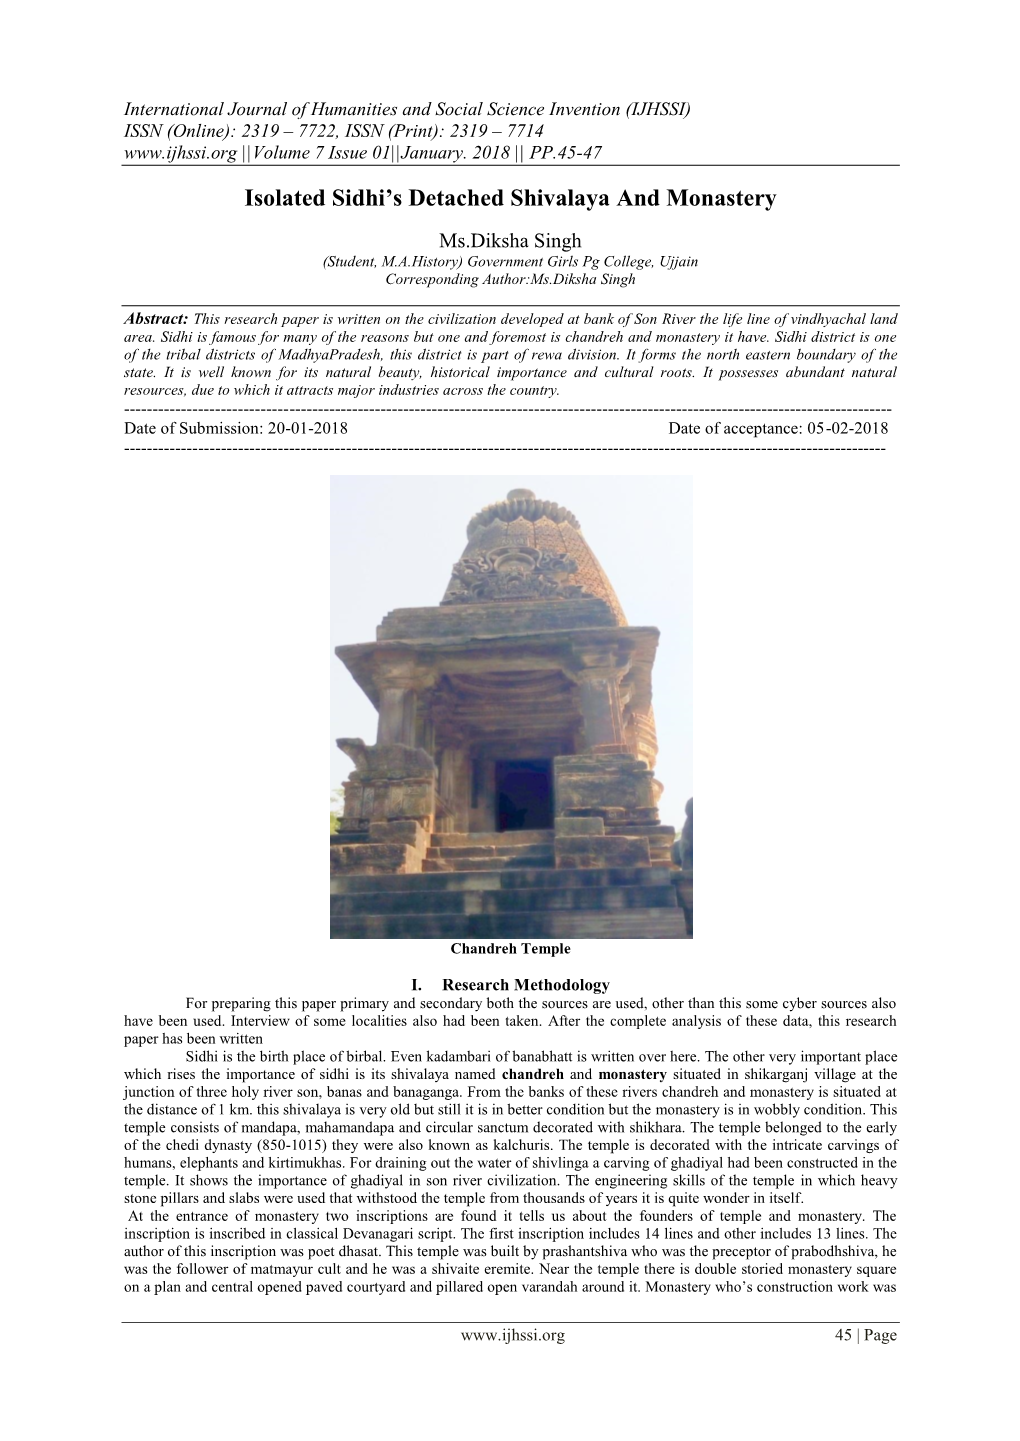 Isolated Sidhi's Detached Shivalaya and Monastery